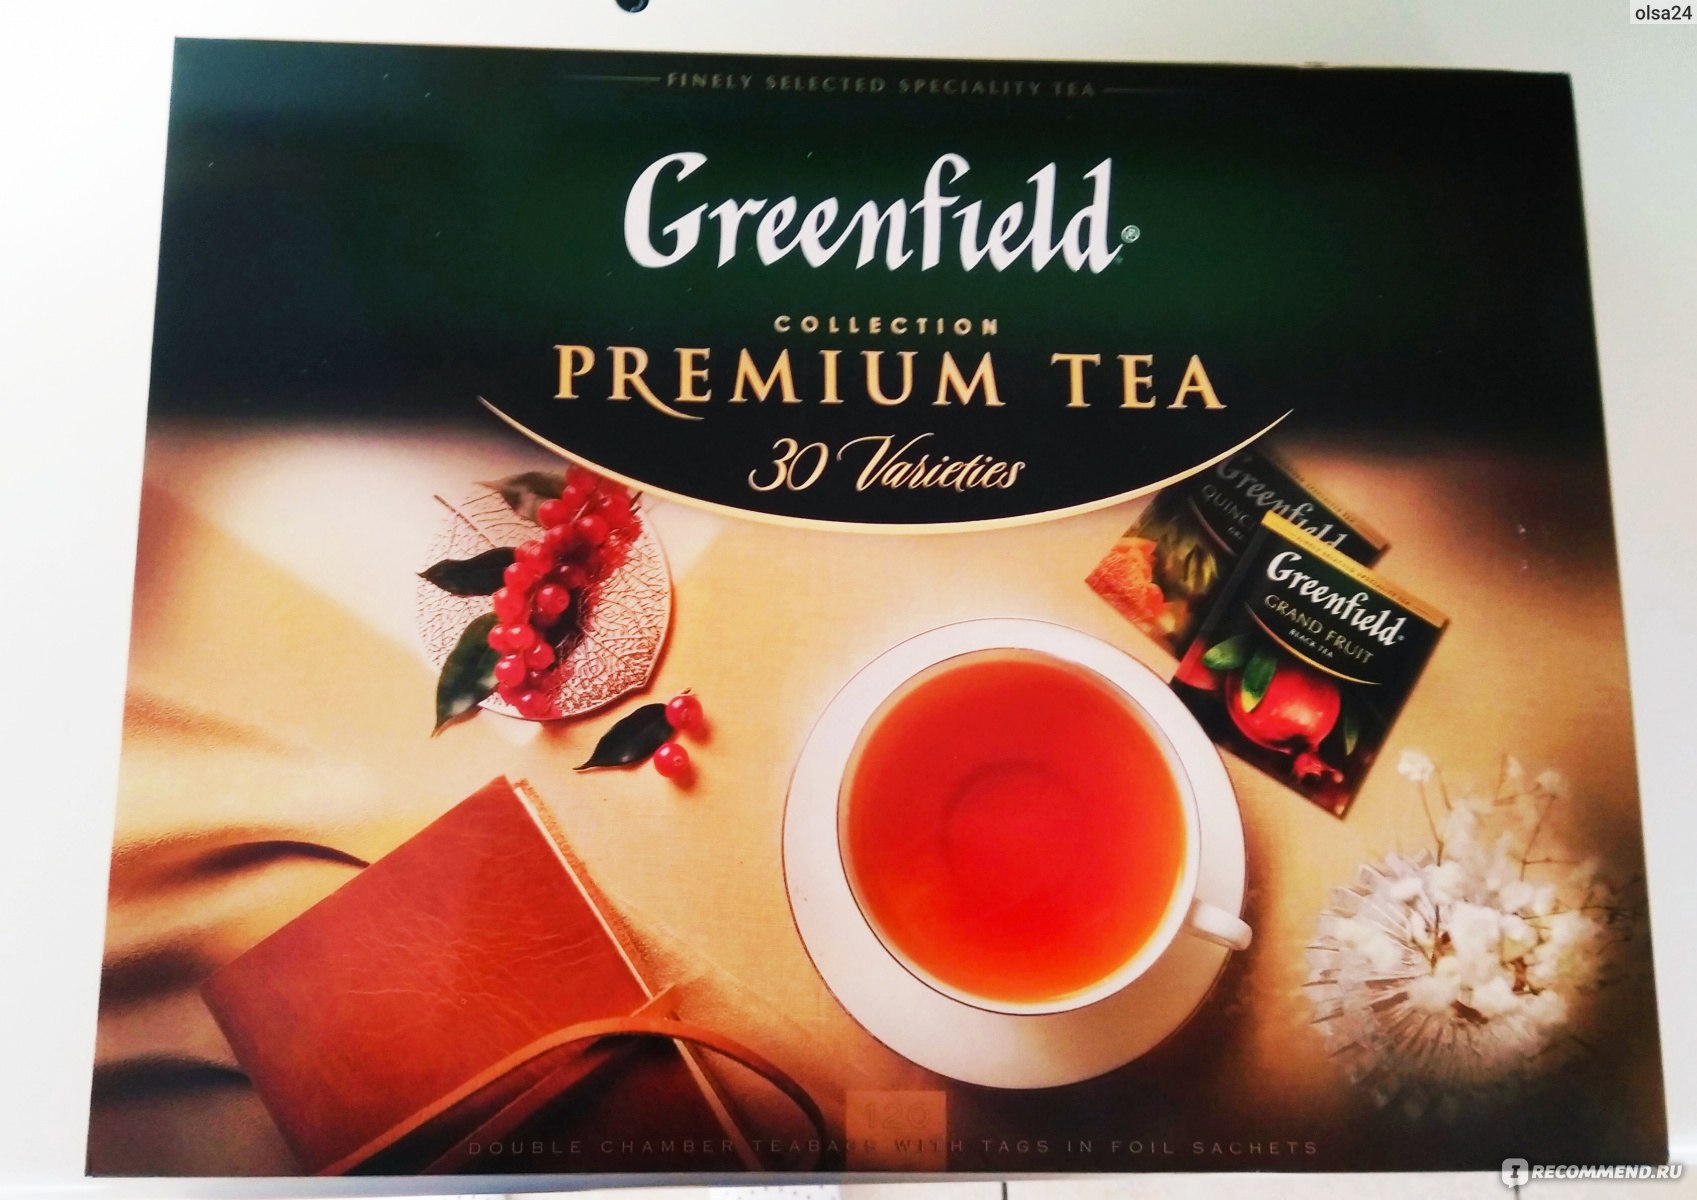 Greenfield Premium Tea